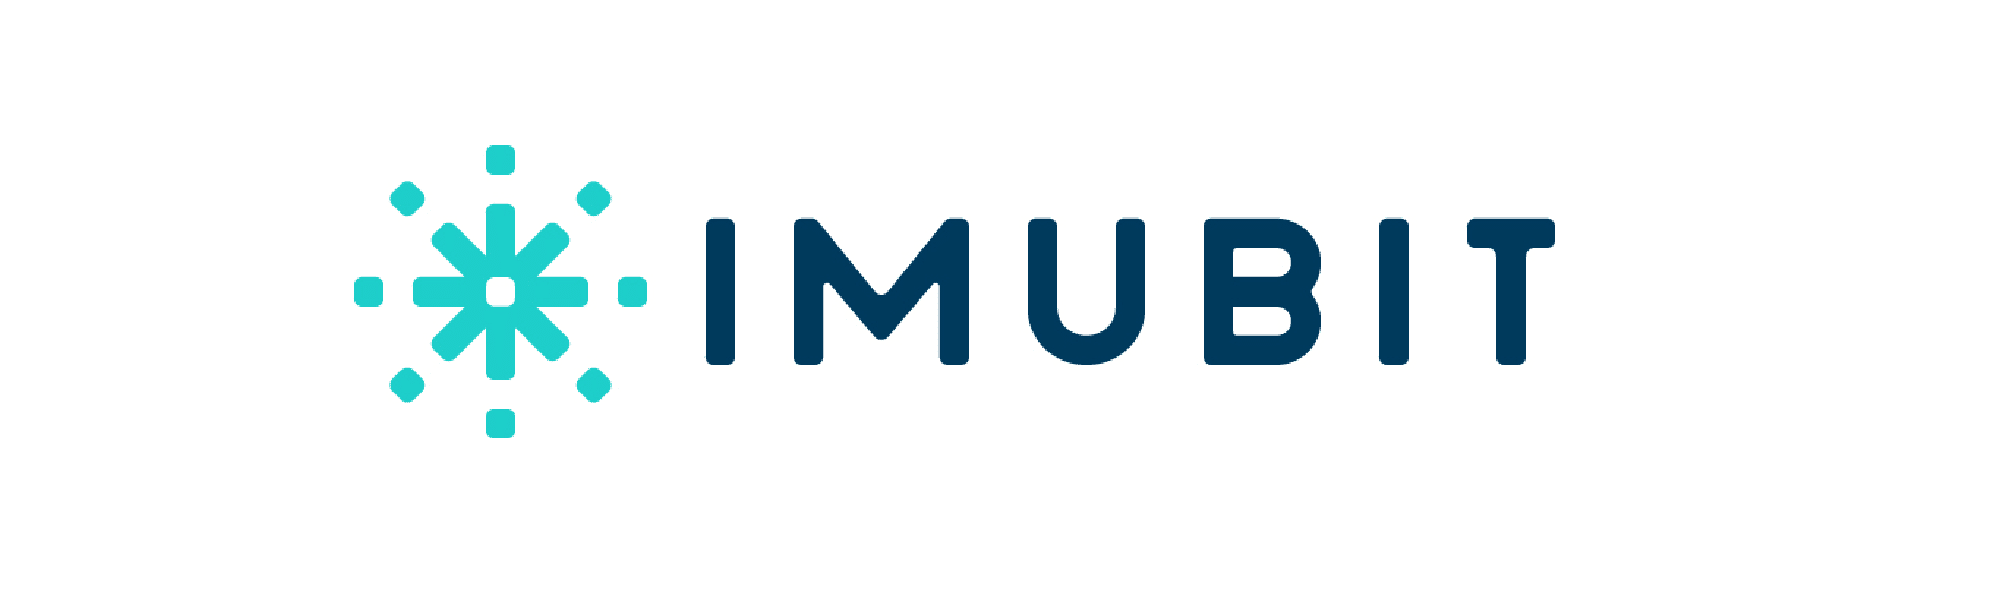 imubit-logo-2000x600px